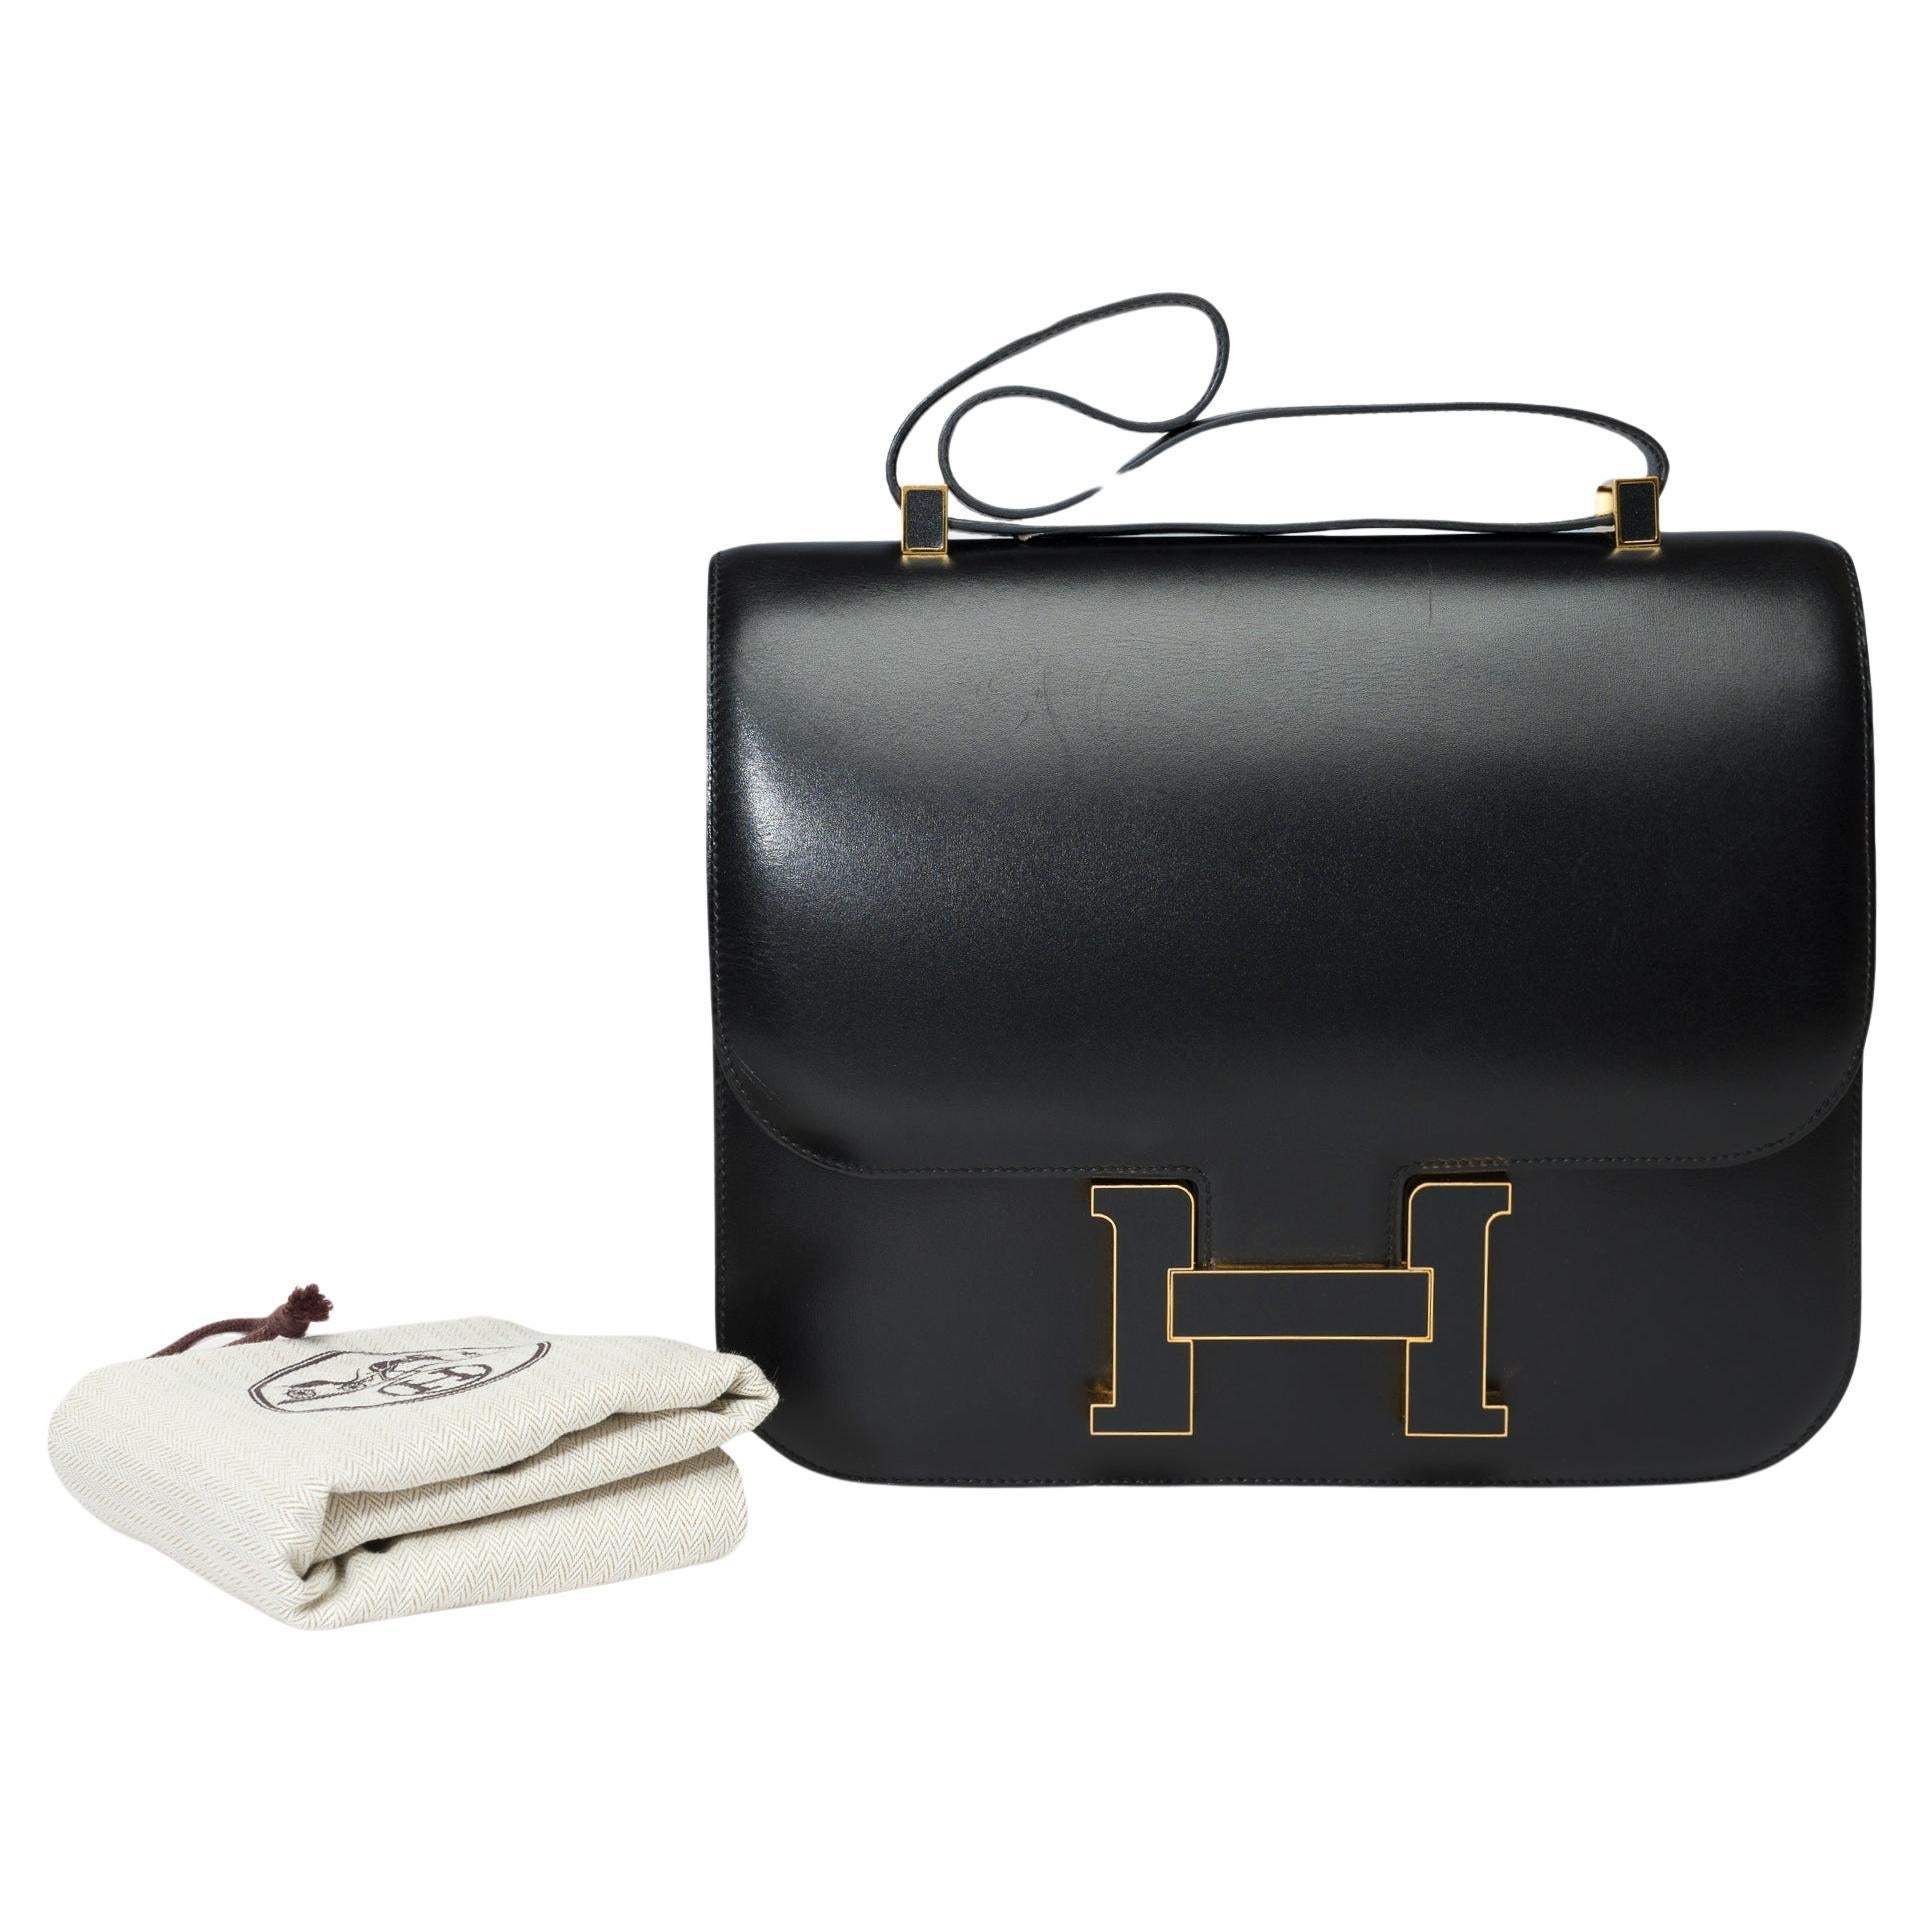  Rare Hermès Constance Cartable shoulder bag in Black Box Calf leather , GHW For Sale